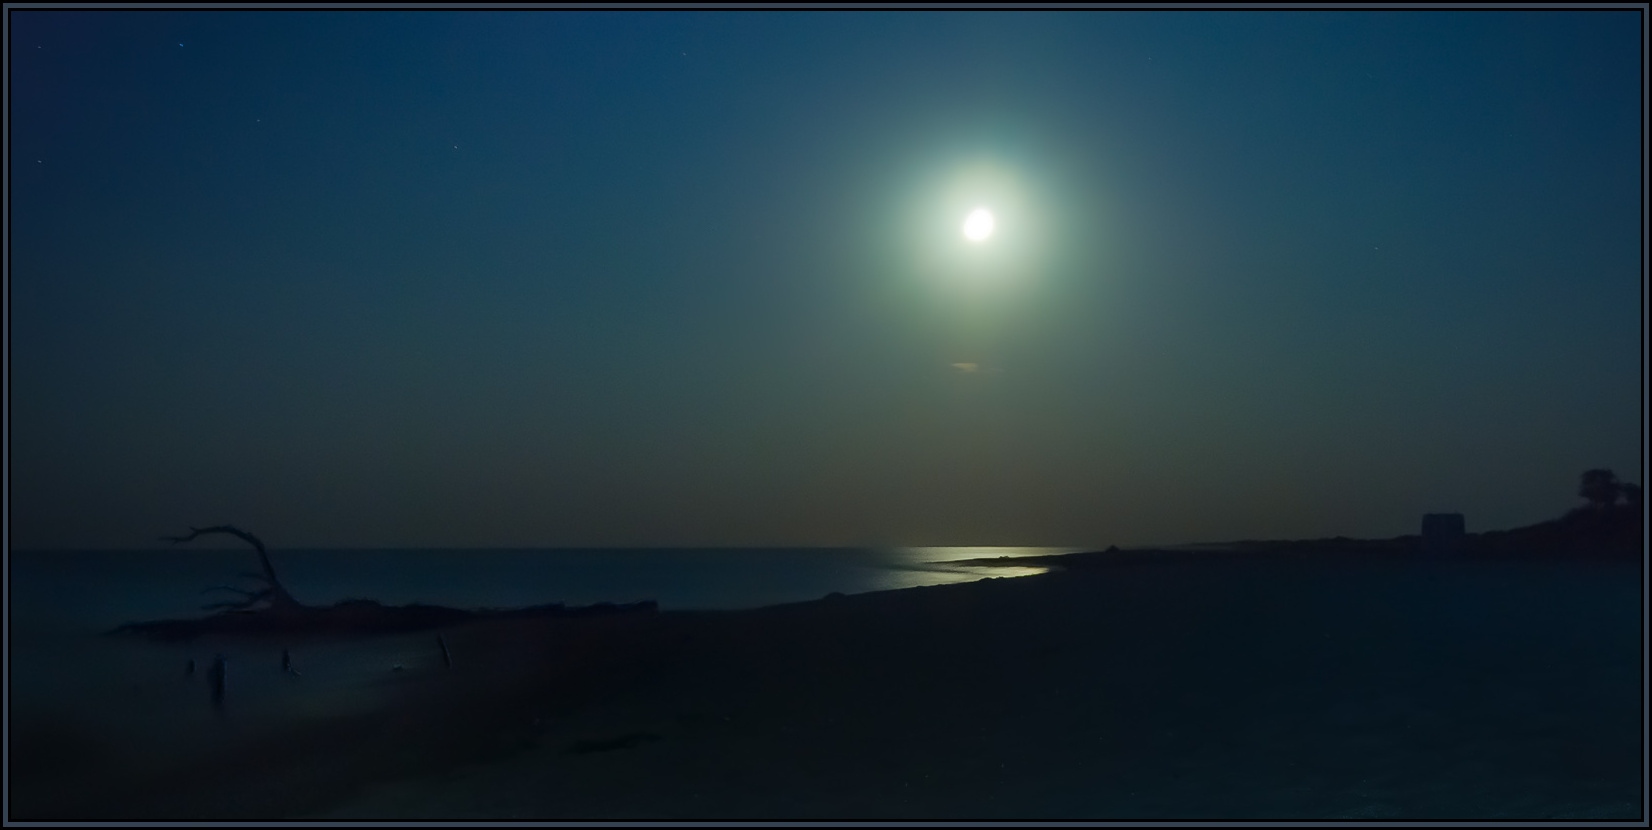 Лунный свет | Фотограф Александр Тхорев | foto.by фото.бай